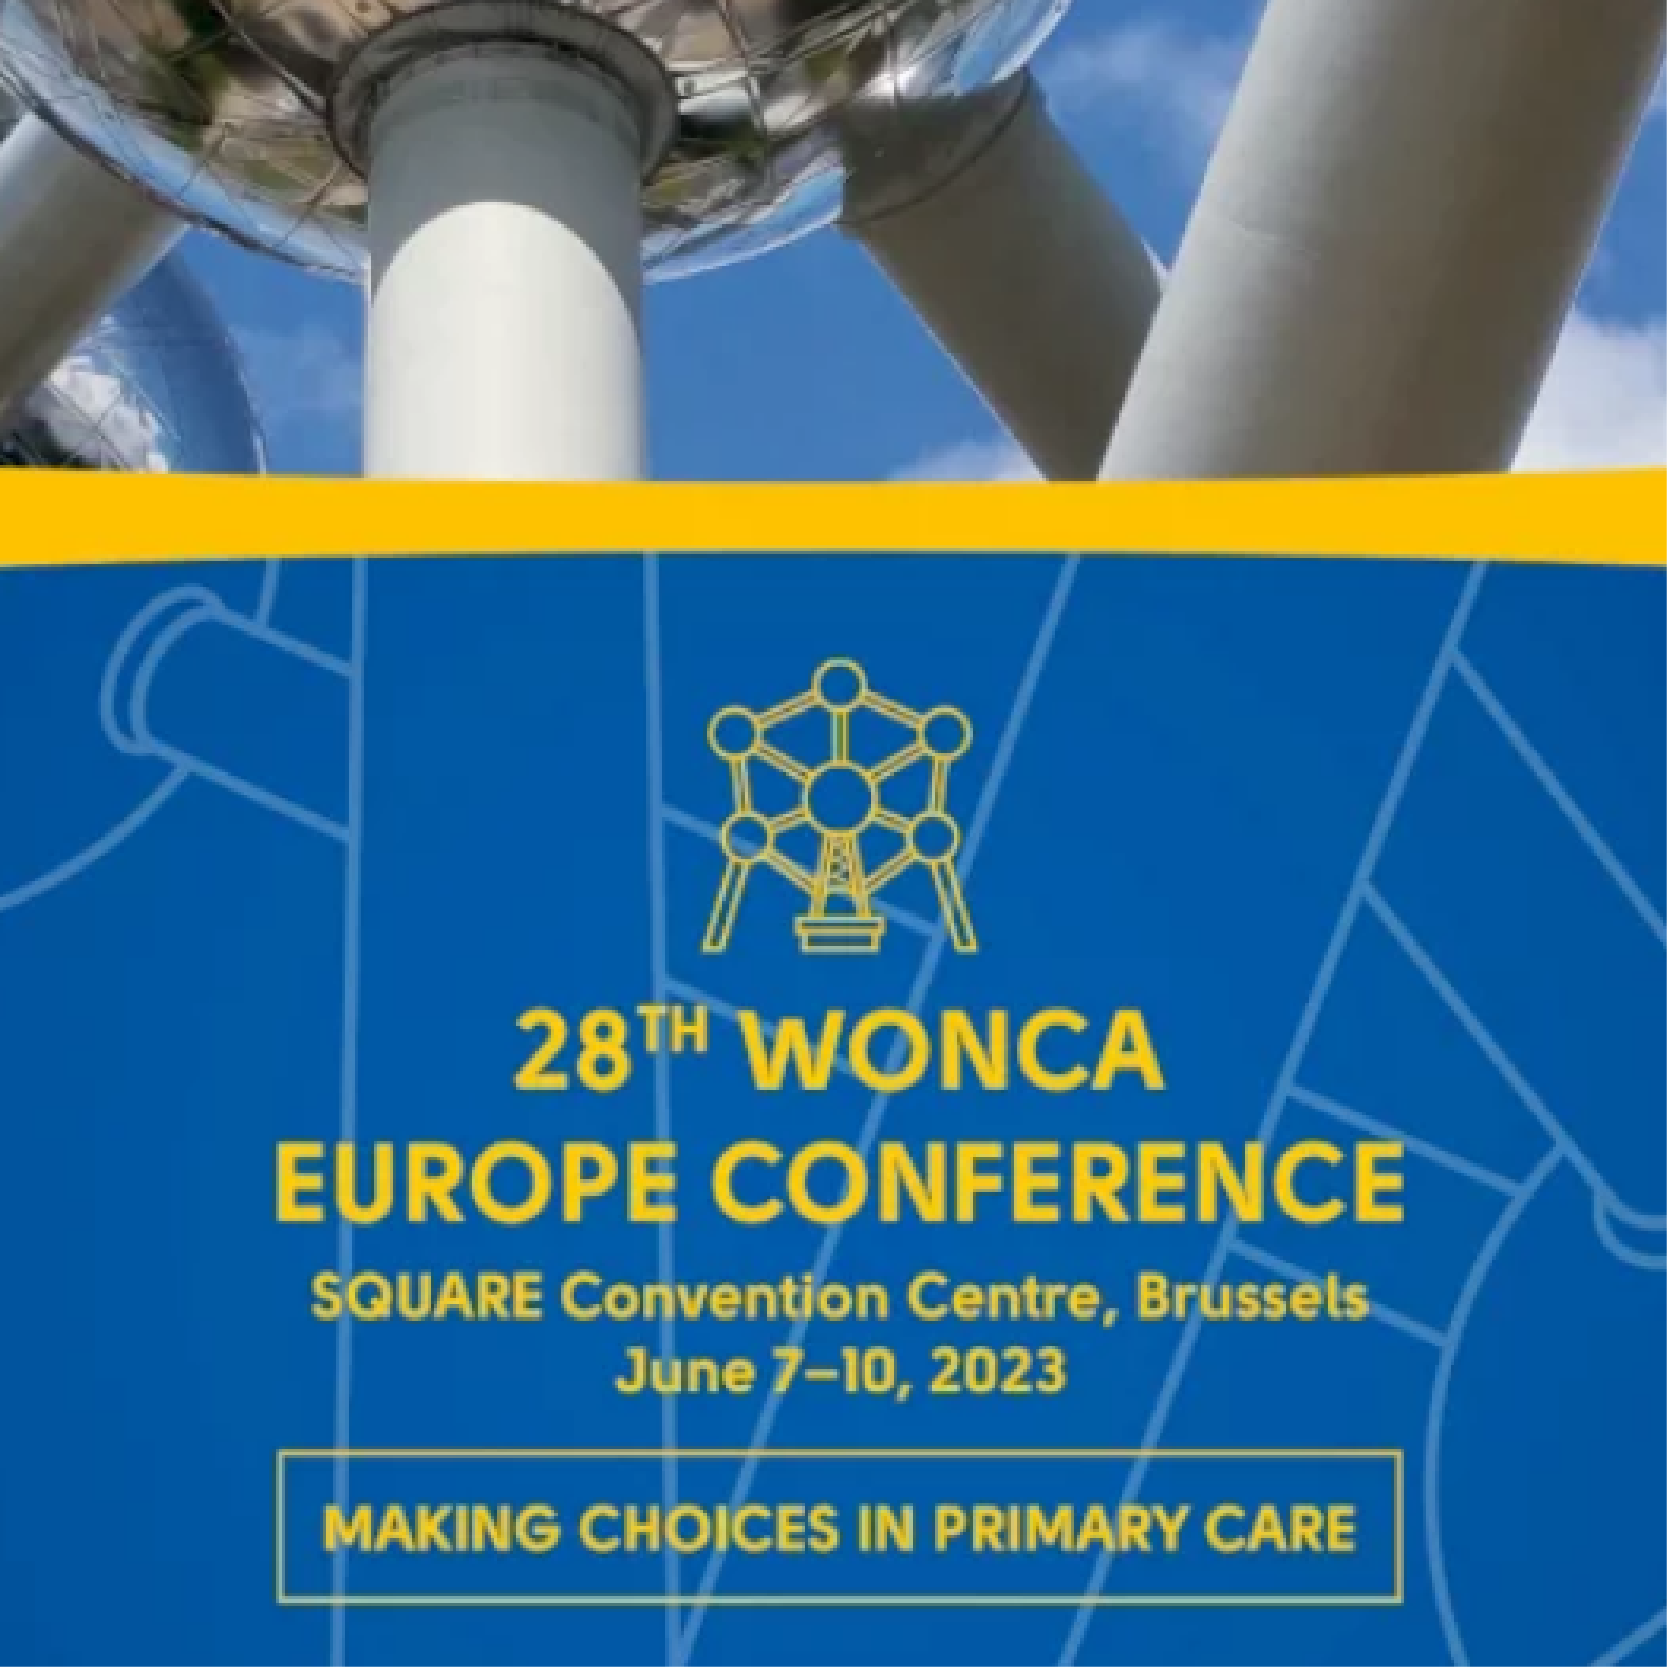 Medflixs 28th WONCA Europe Conference 2023